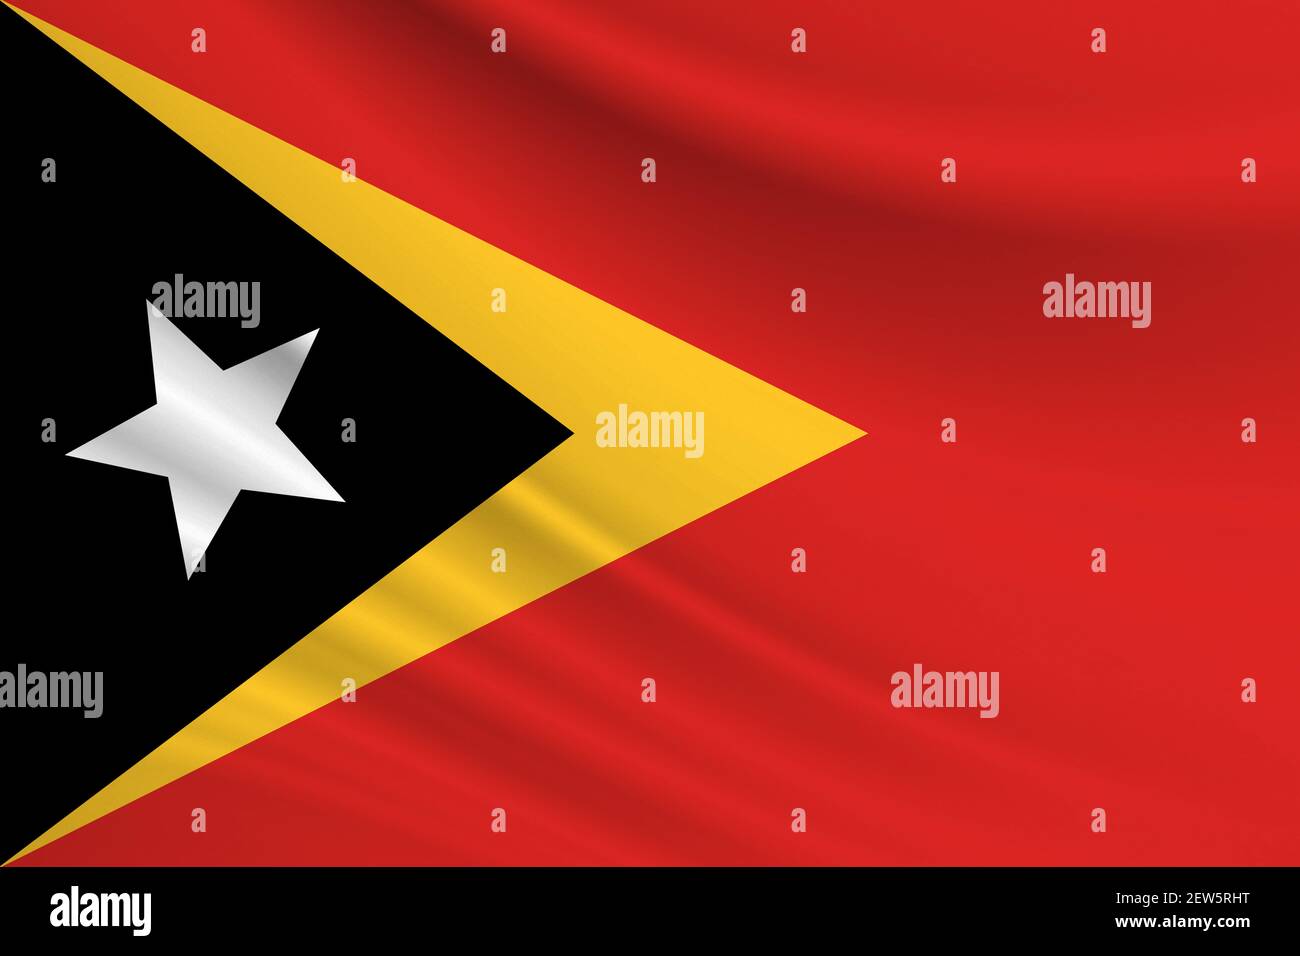 Drapeau du Timor oriental. Texture du tissu du drapeau du Timor oriental. Banque D'Images